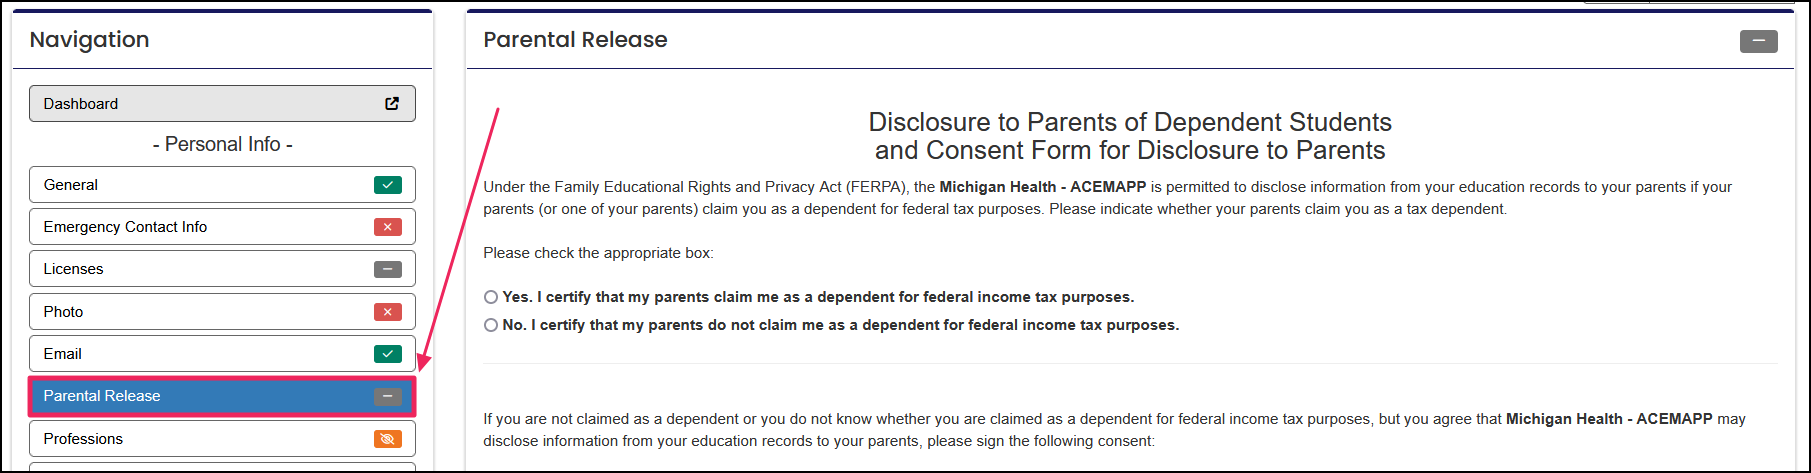 Parent Release form highlighting Parental Release button